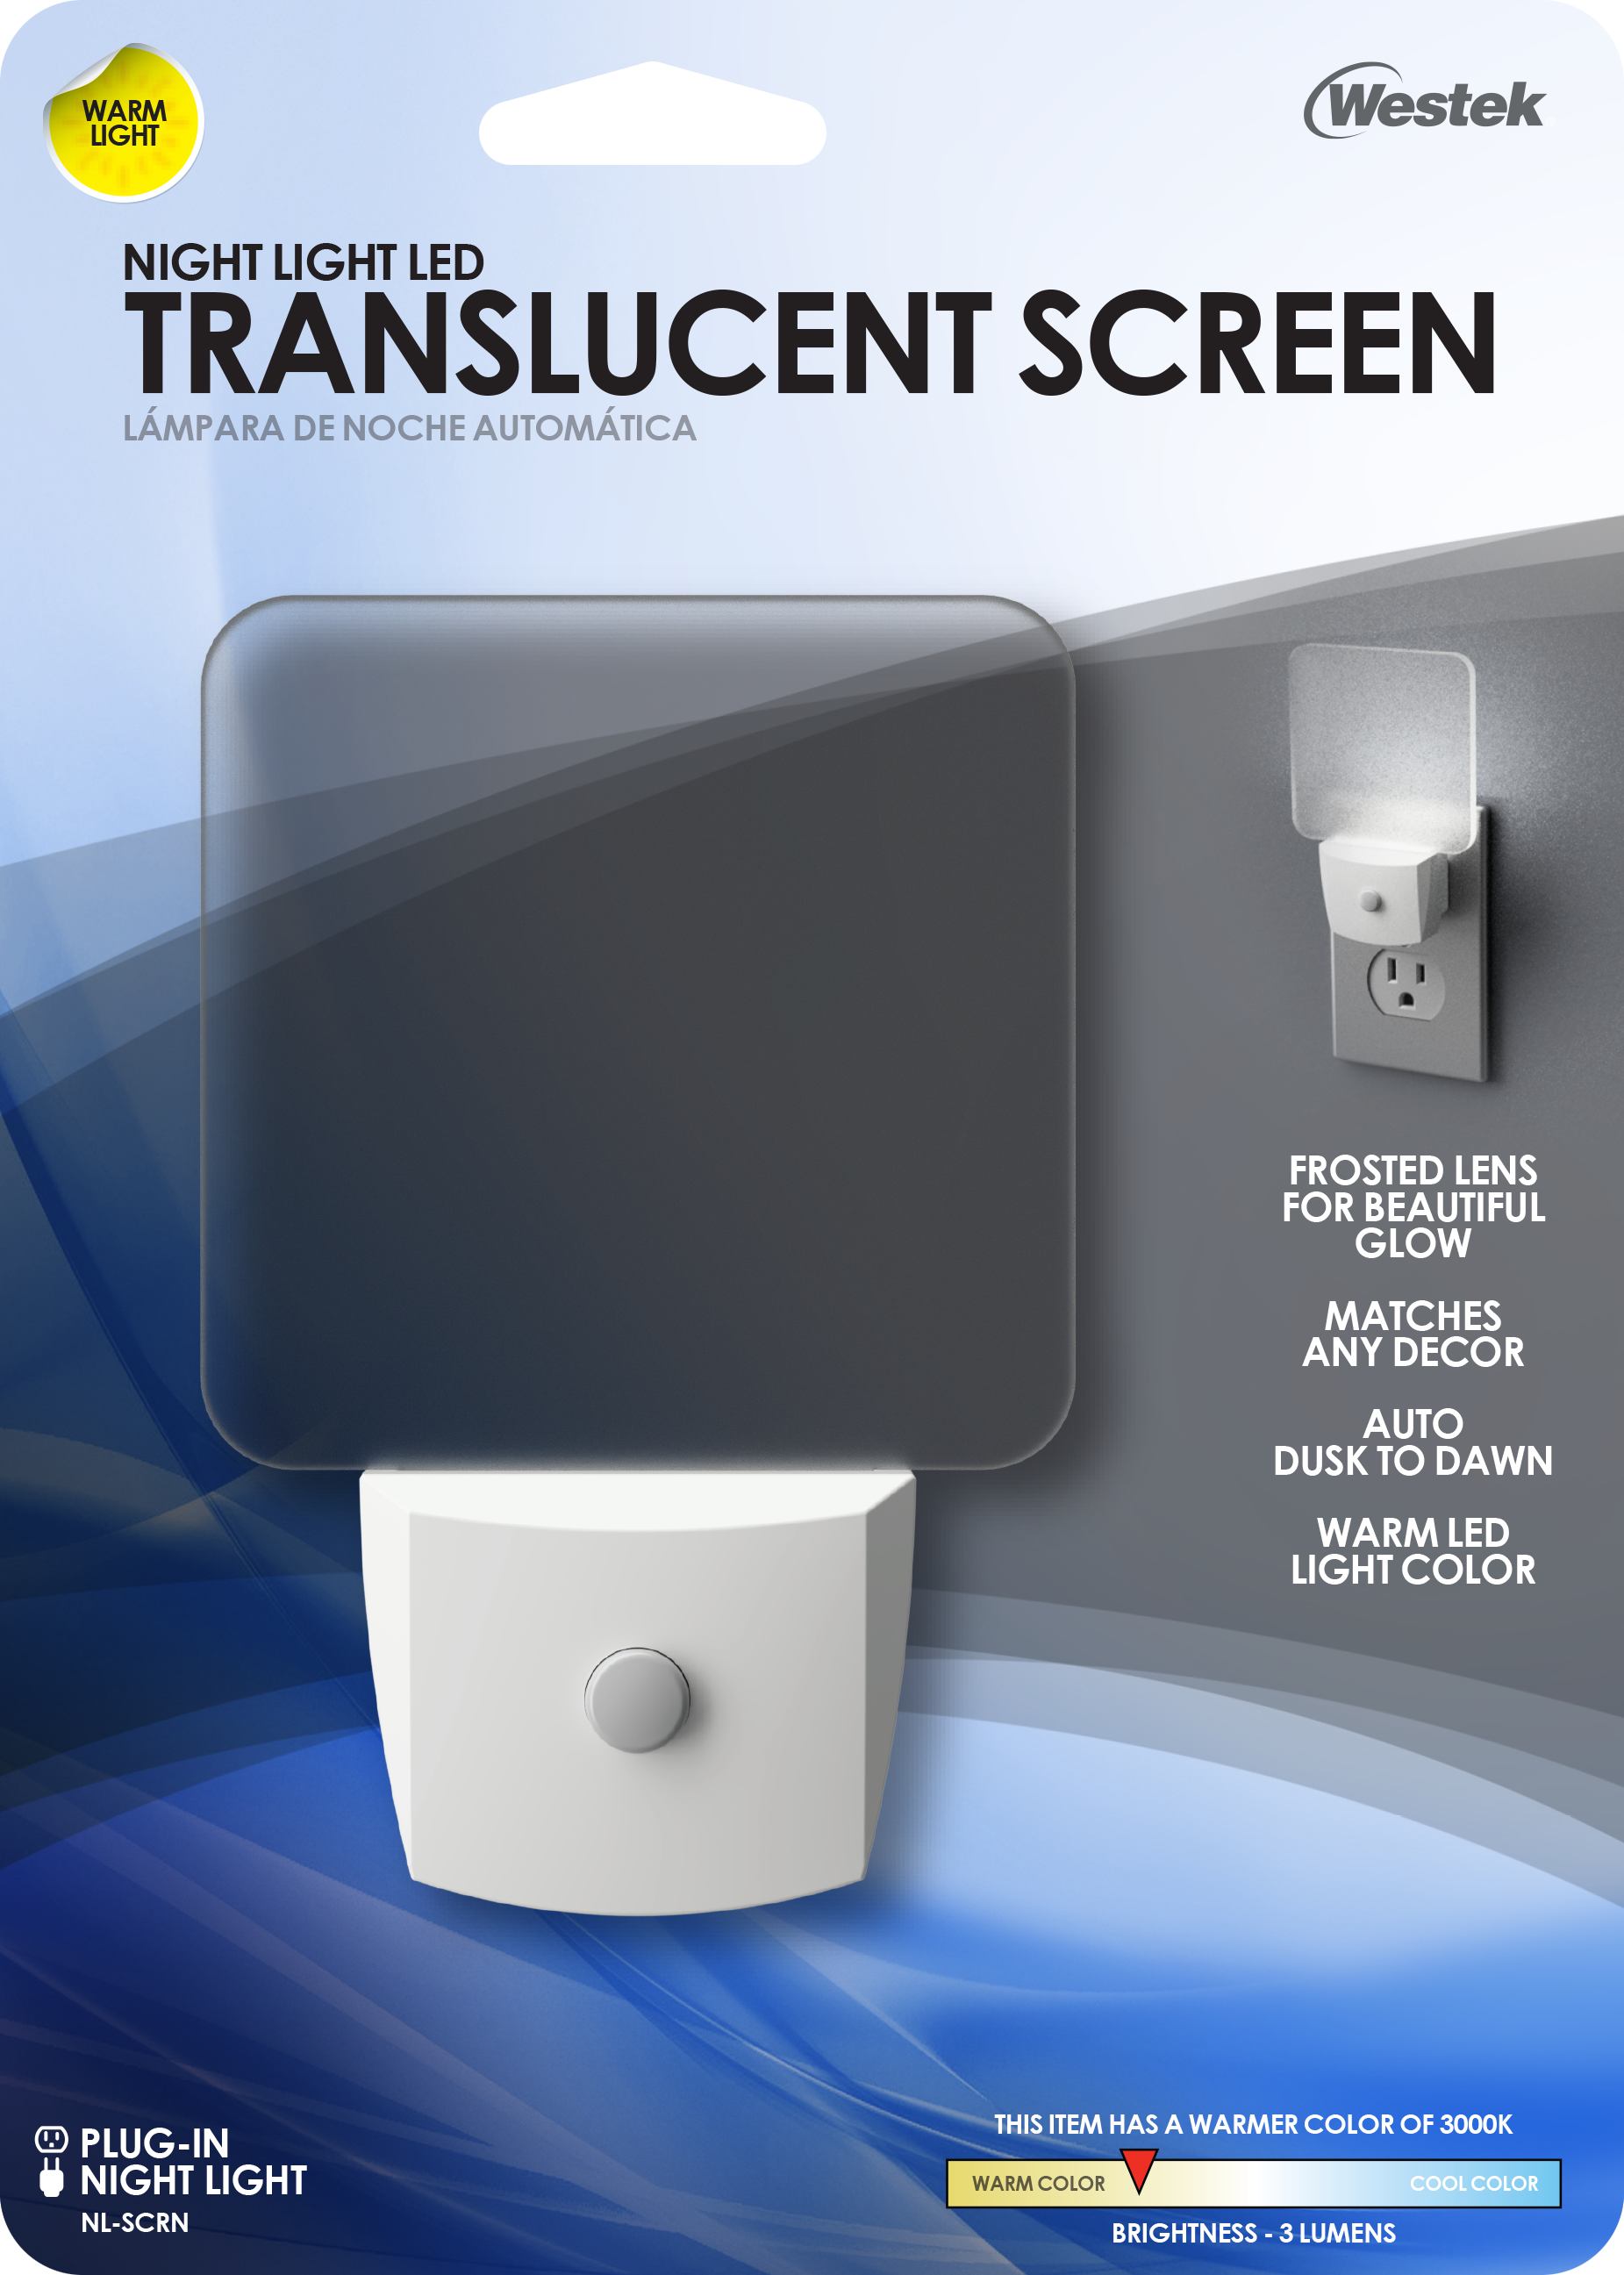 Translucent Screen LED Automatic Night Light